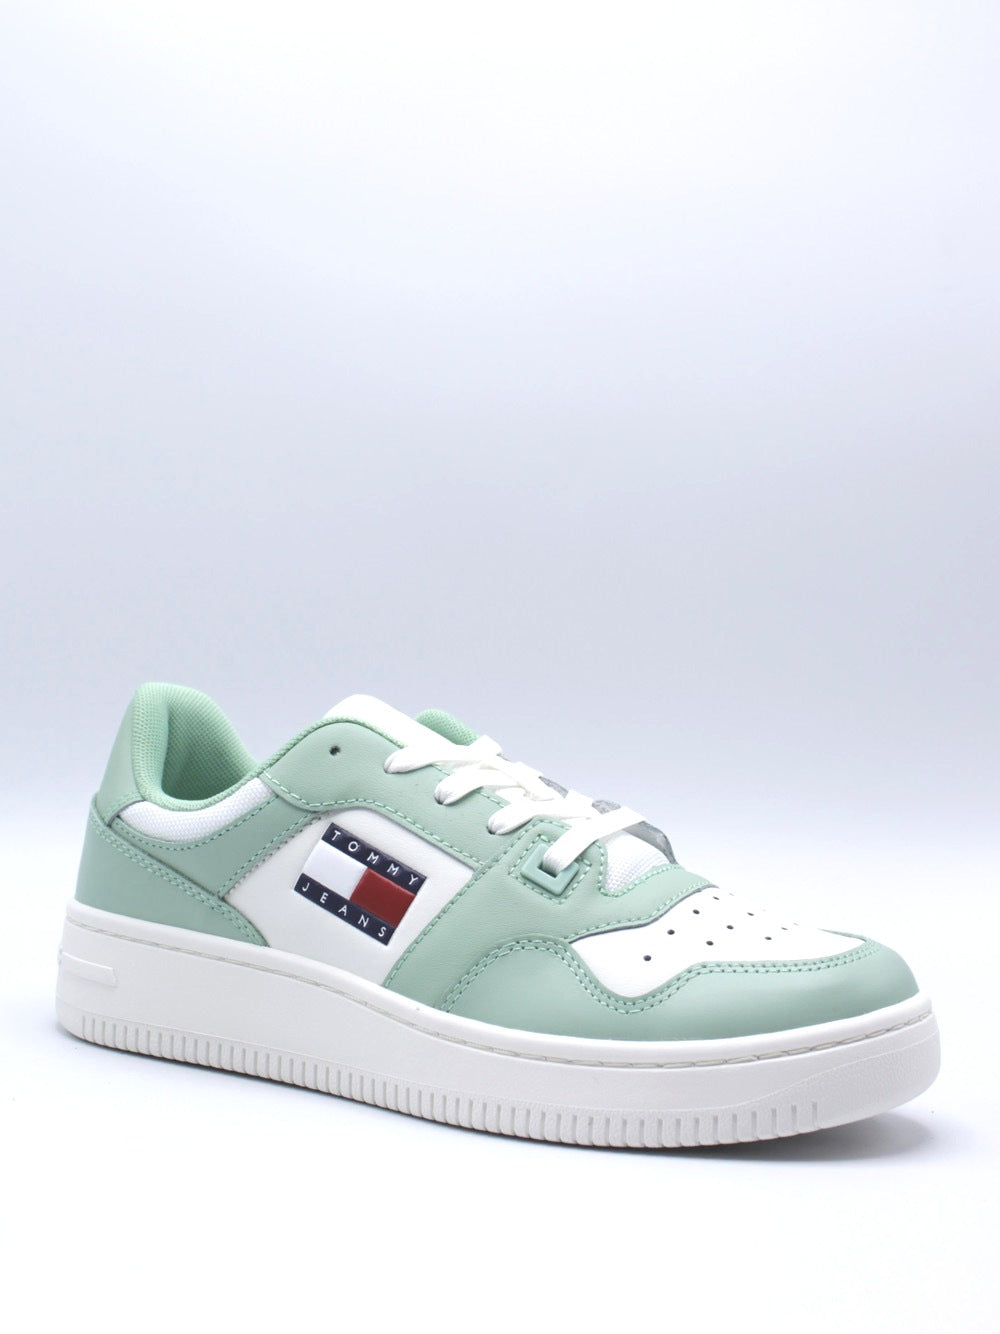 TOMMY HILFIGER Sneakers Donna - Bianco/verde